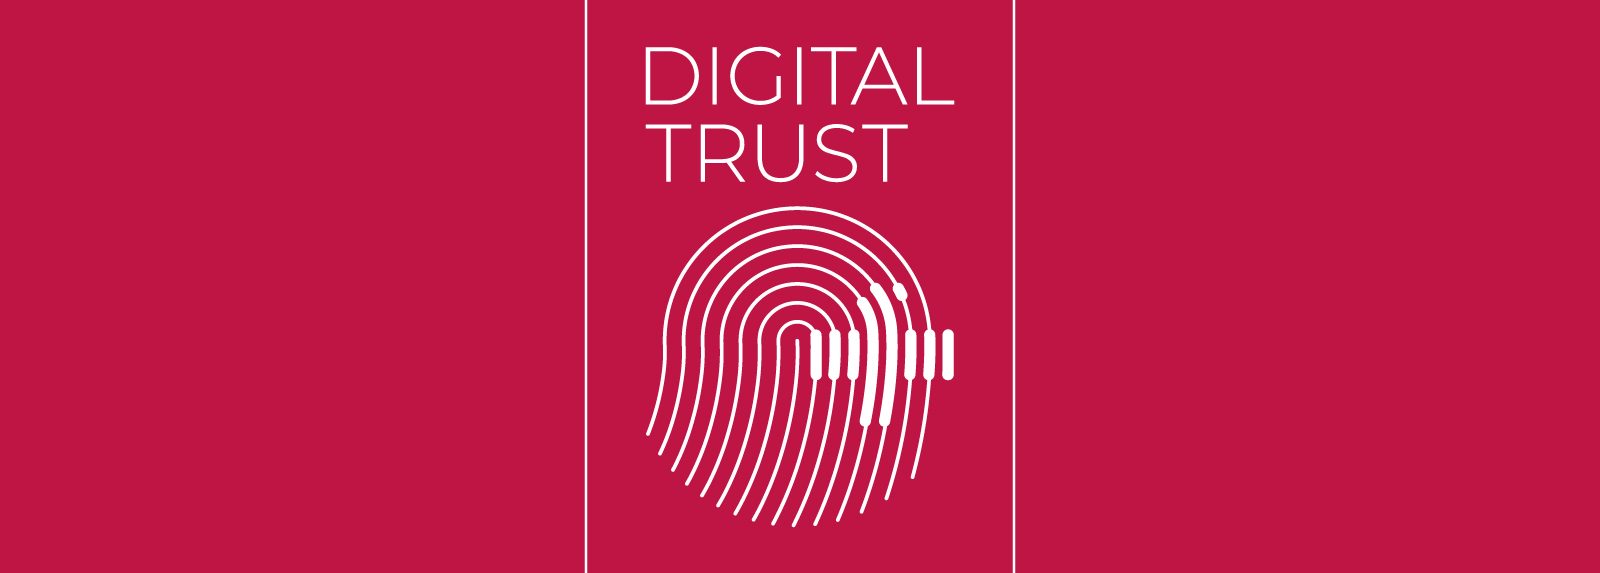 Digital Trust Share